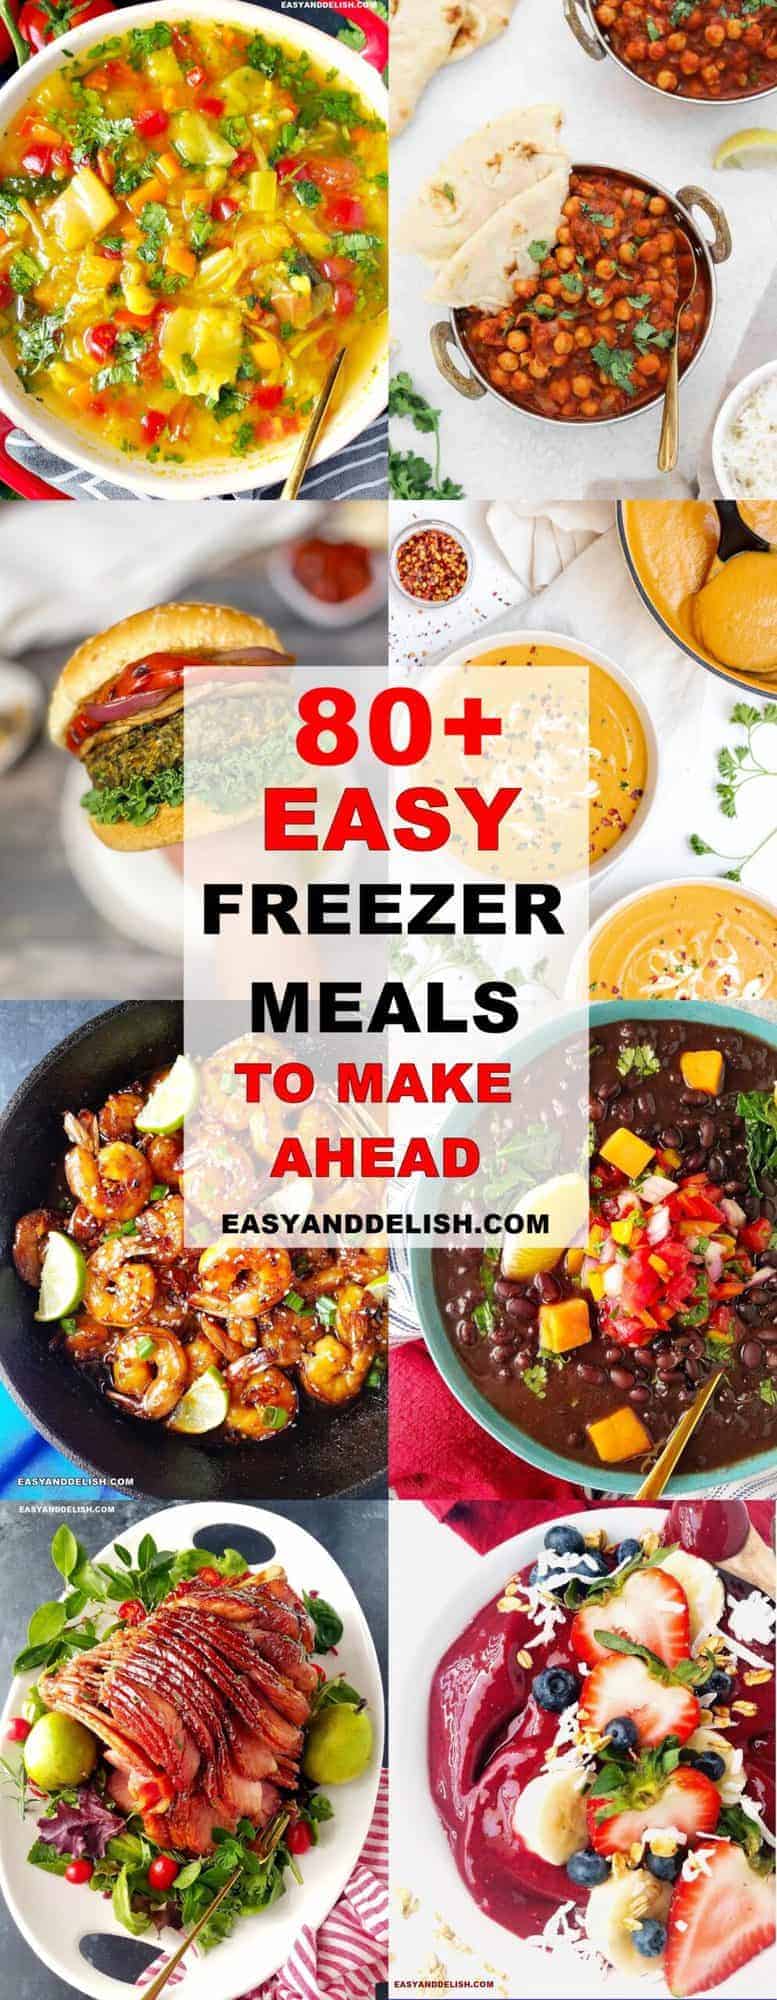 https://www.easyanddelish.com/wp-content/uploads/2020/02/Easy-freezer-meals-to-make-ahead-pinterest-scaled.jpg